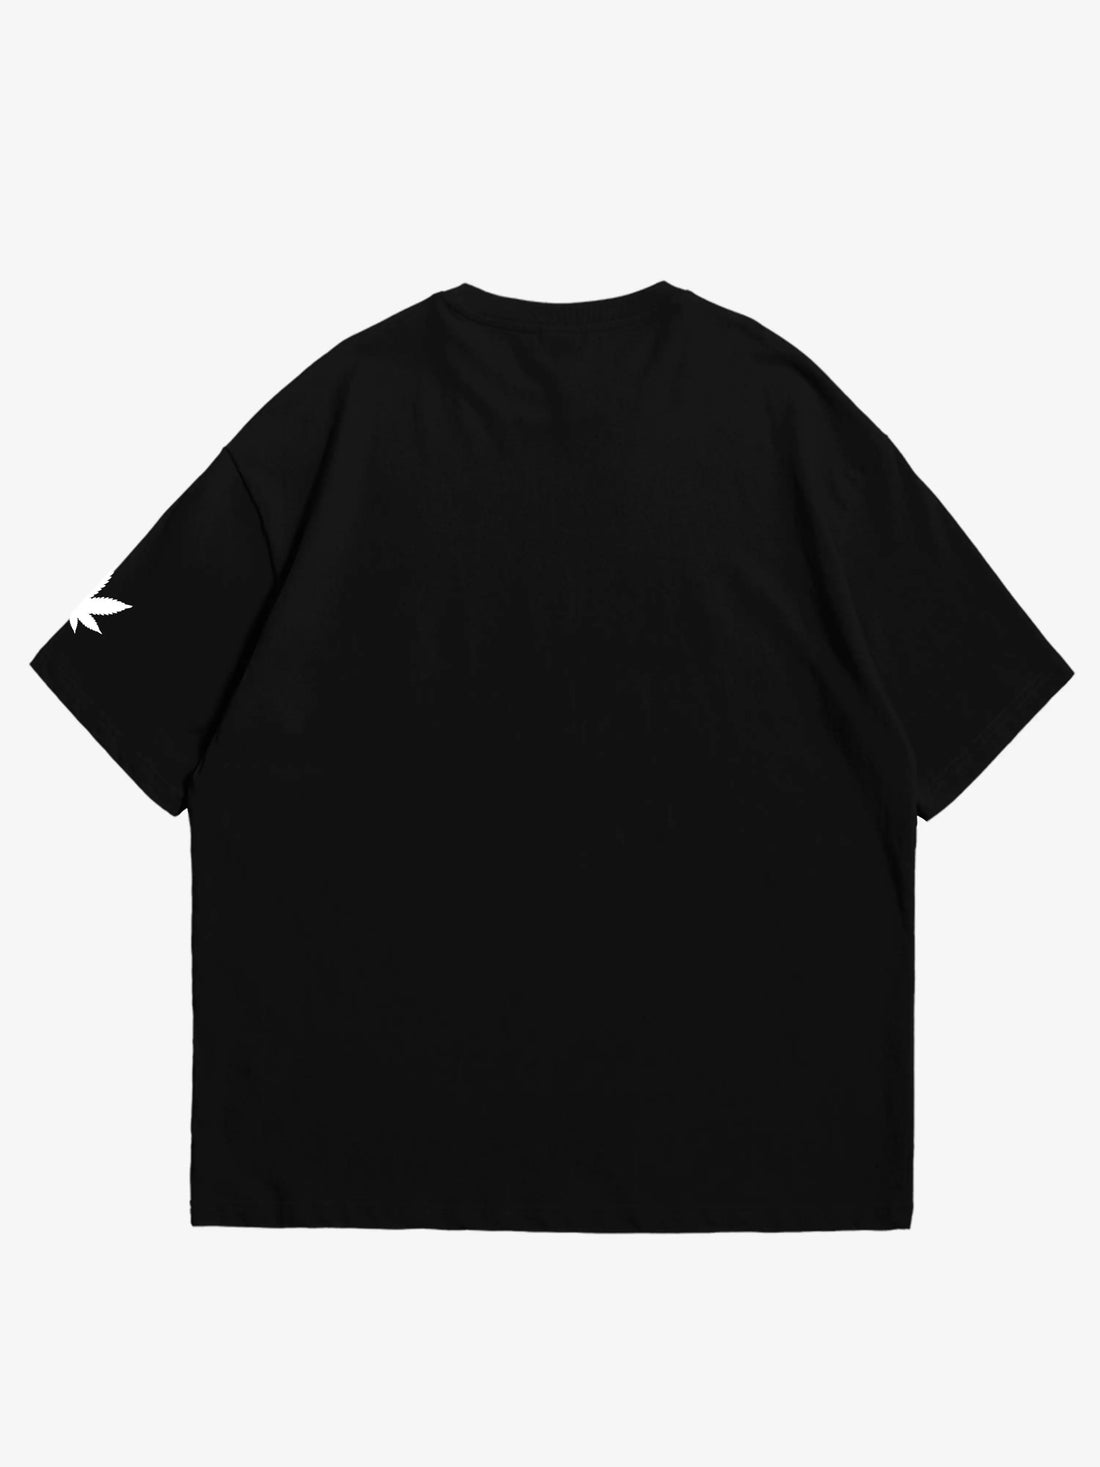 black oversized t-shirt, graphic y2k print, skream streetwear t-shirt